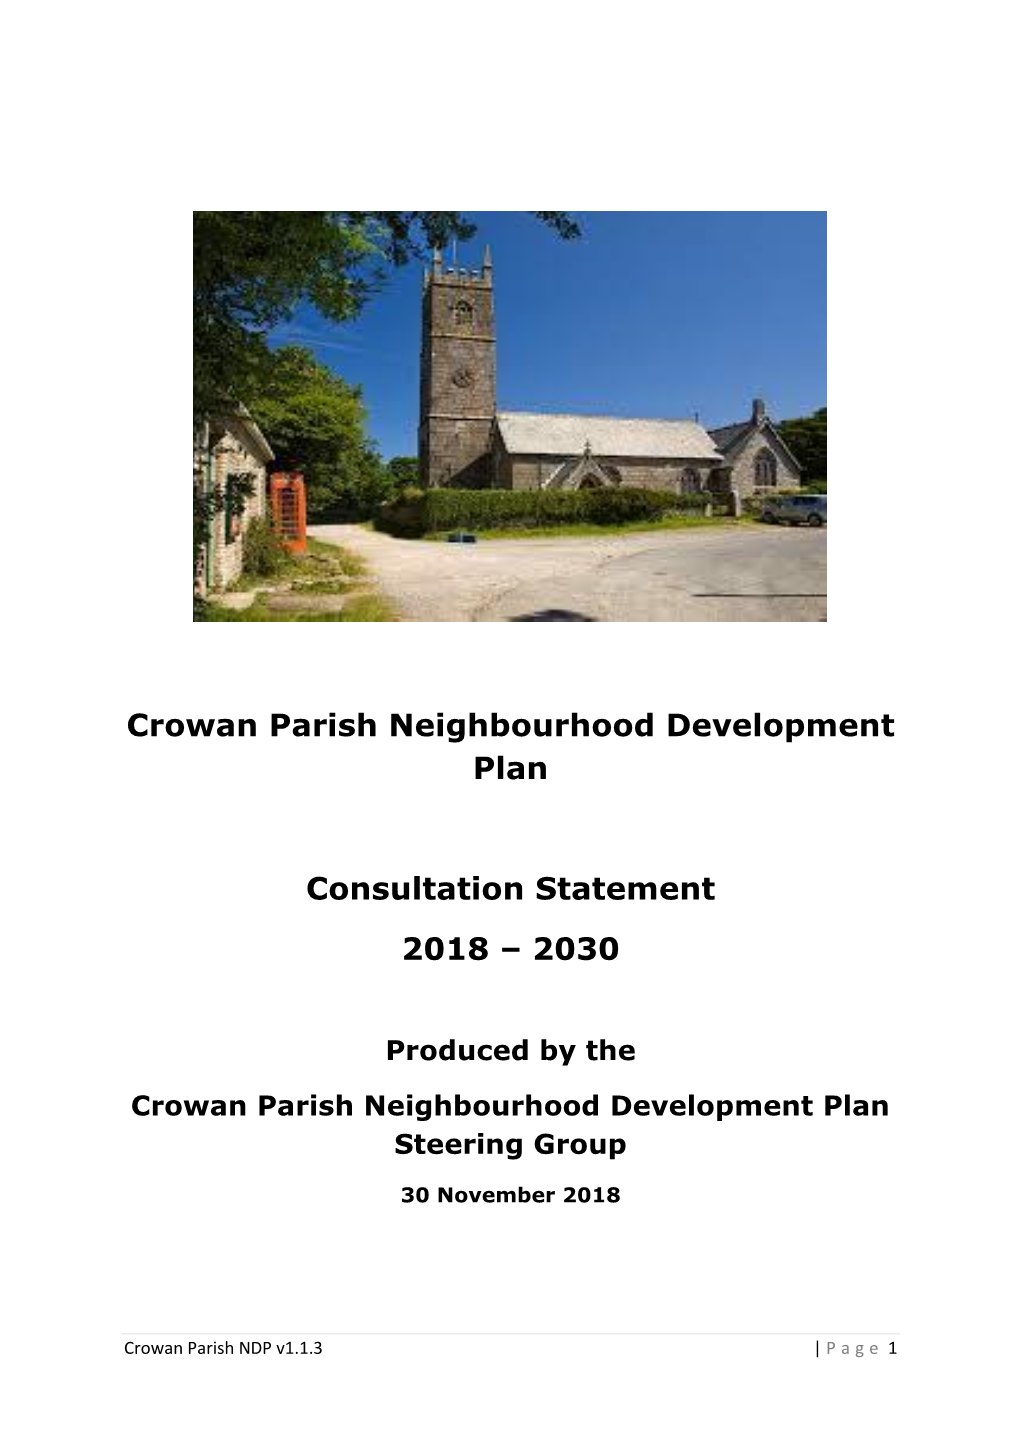 Crowan Parish Council